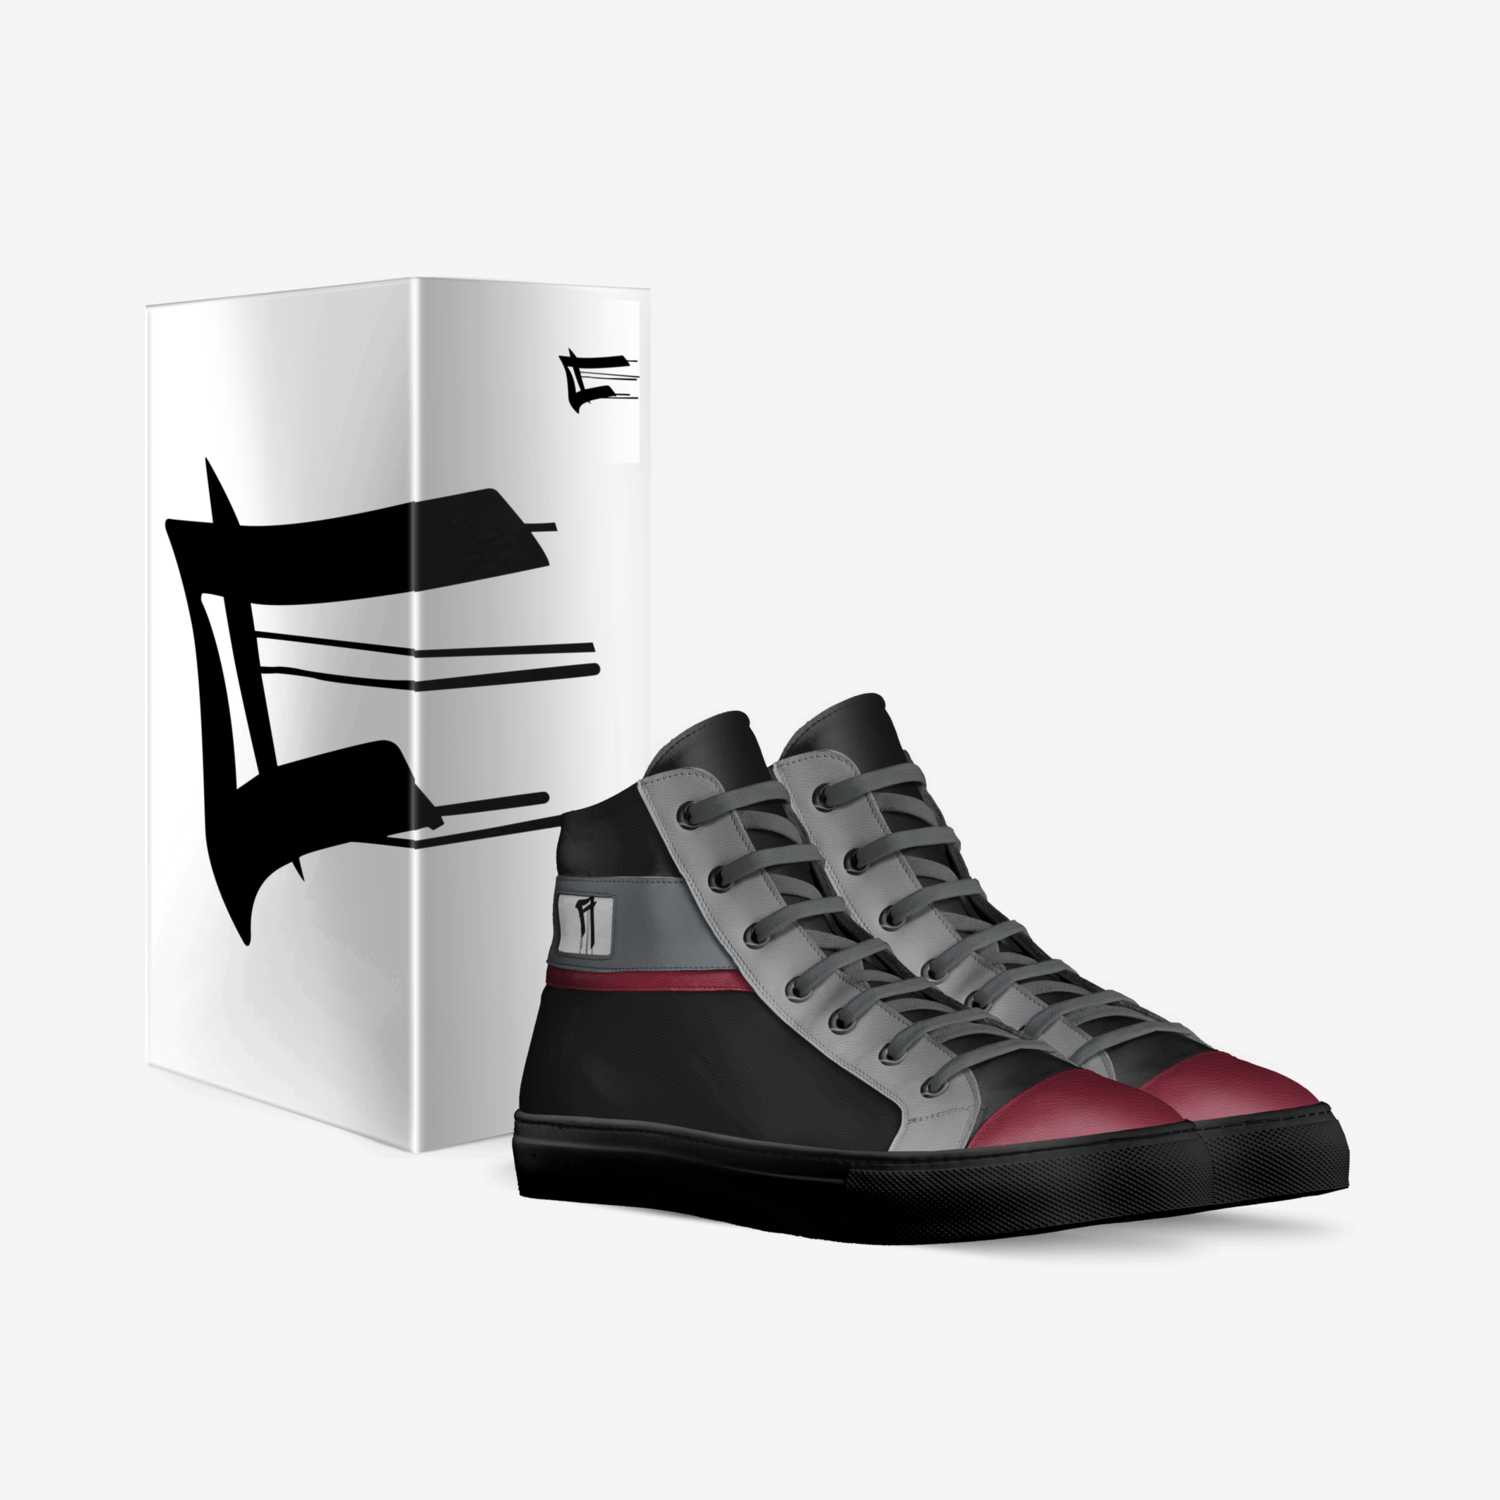 Almiya.O custom made in Italy shoes by Aaliyah Osborne | Box view